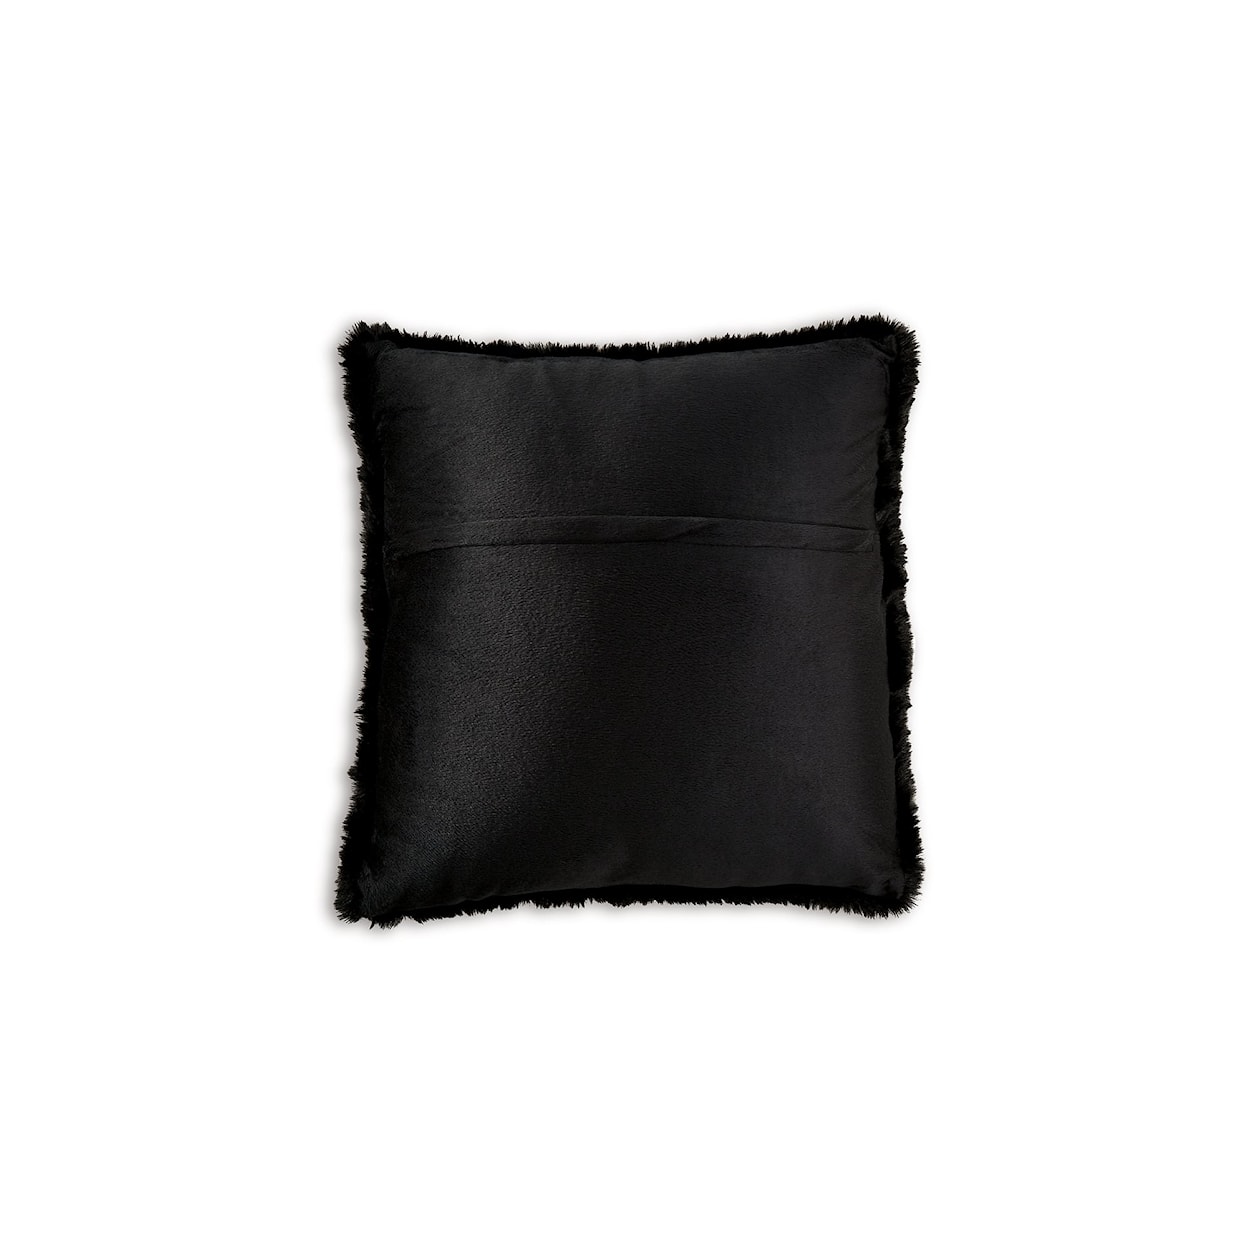 Ashley Furniture Signature Design Gariland Pillow (Set of 4)